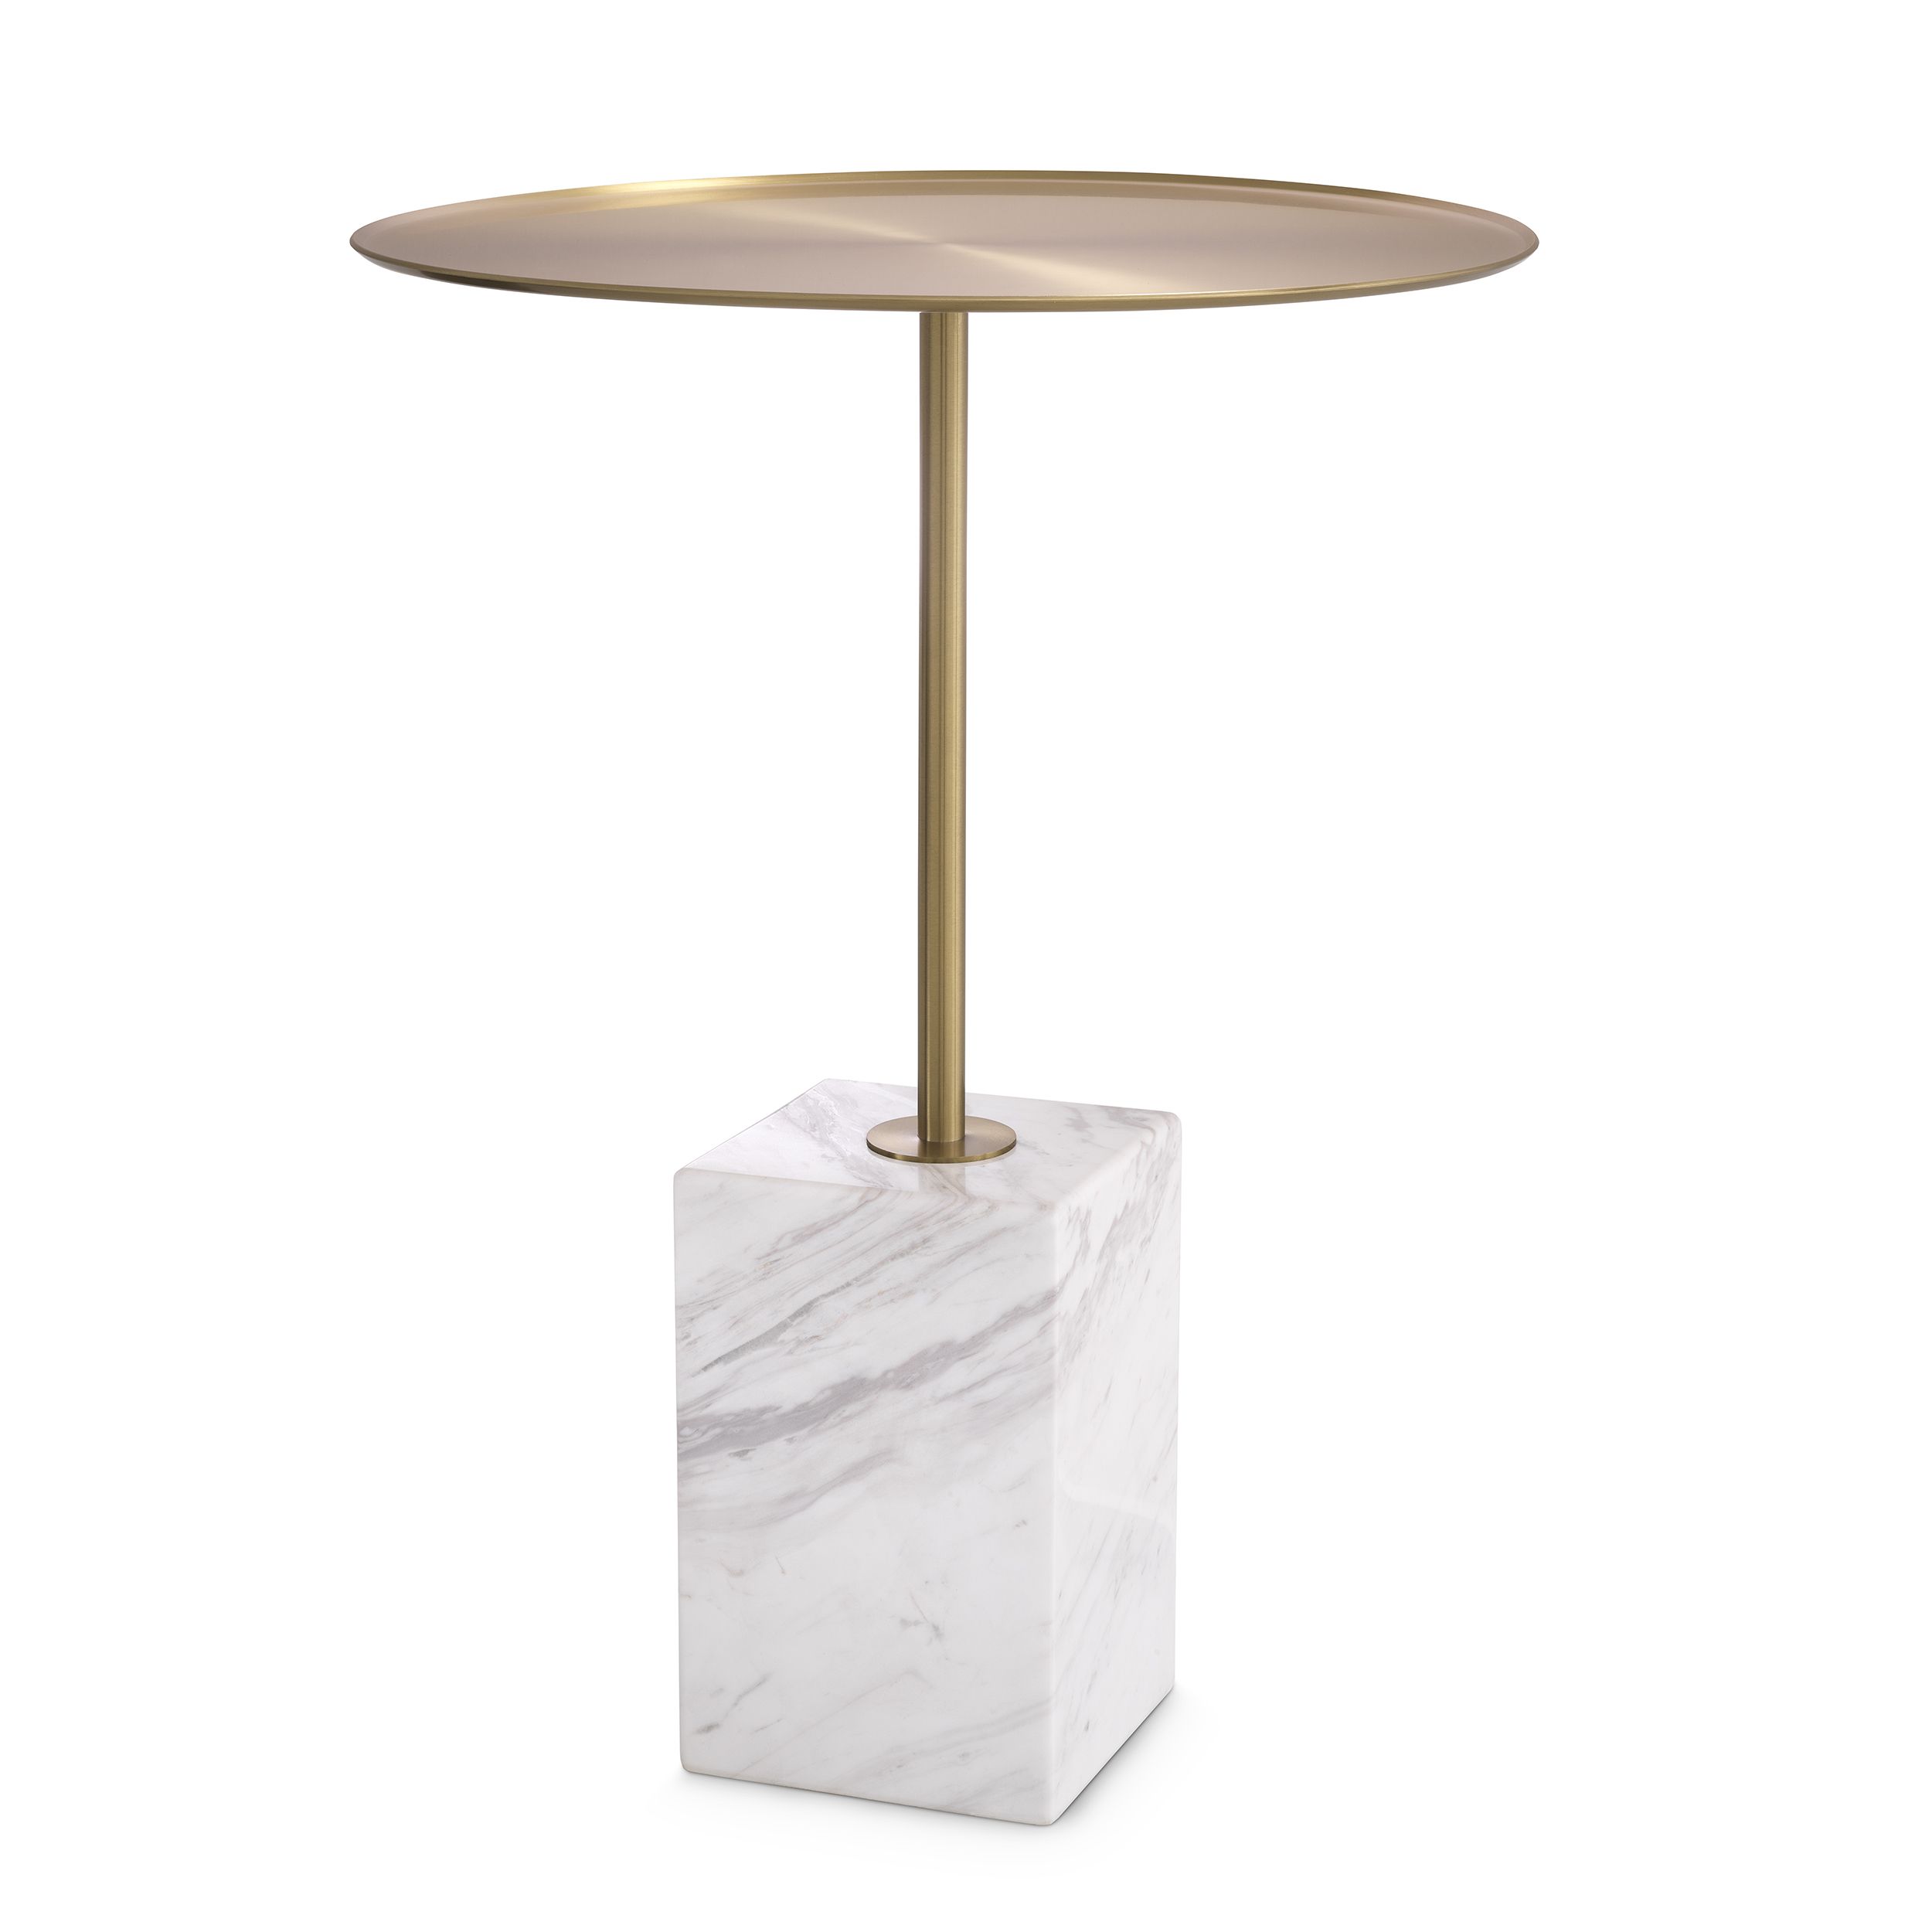 Приставной столик Cole brushed brass finish white marble 115543 Eichholtz НИДЕРЛАНДЫ